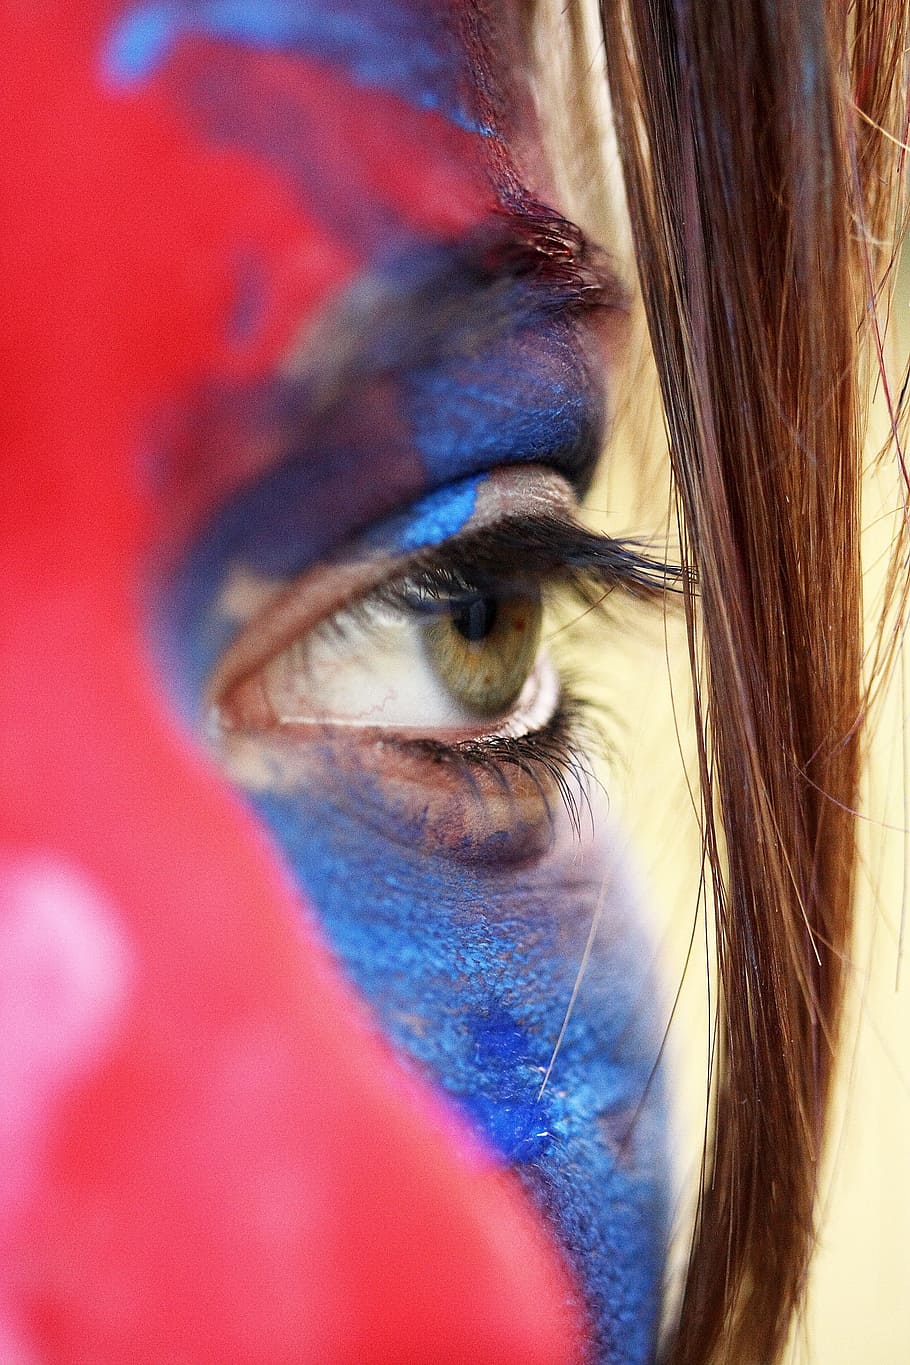 ojo, maquillaje, rojo, azul, bandera, estética, exposición, retrato, mujeres, belleza